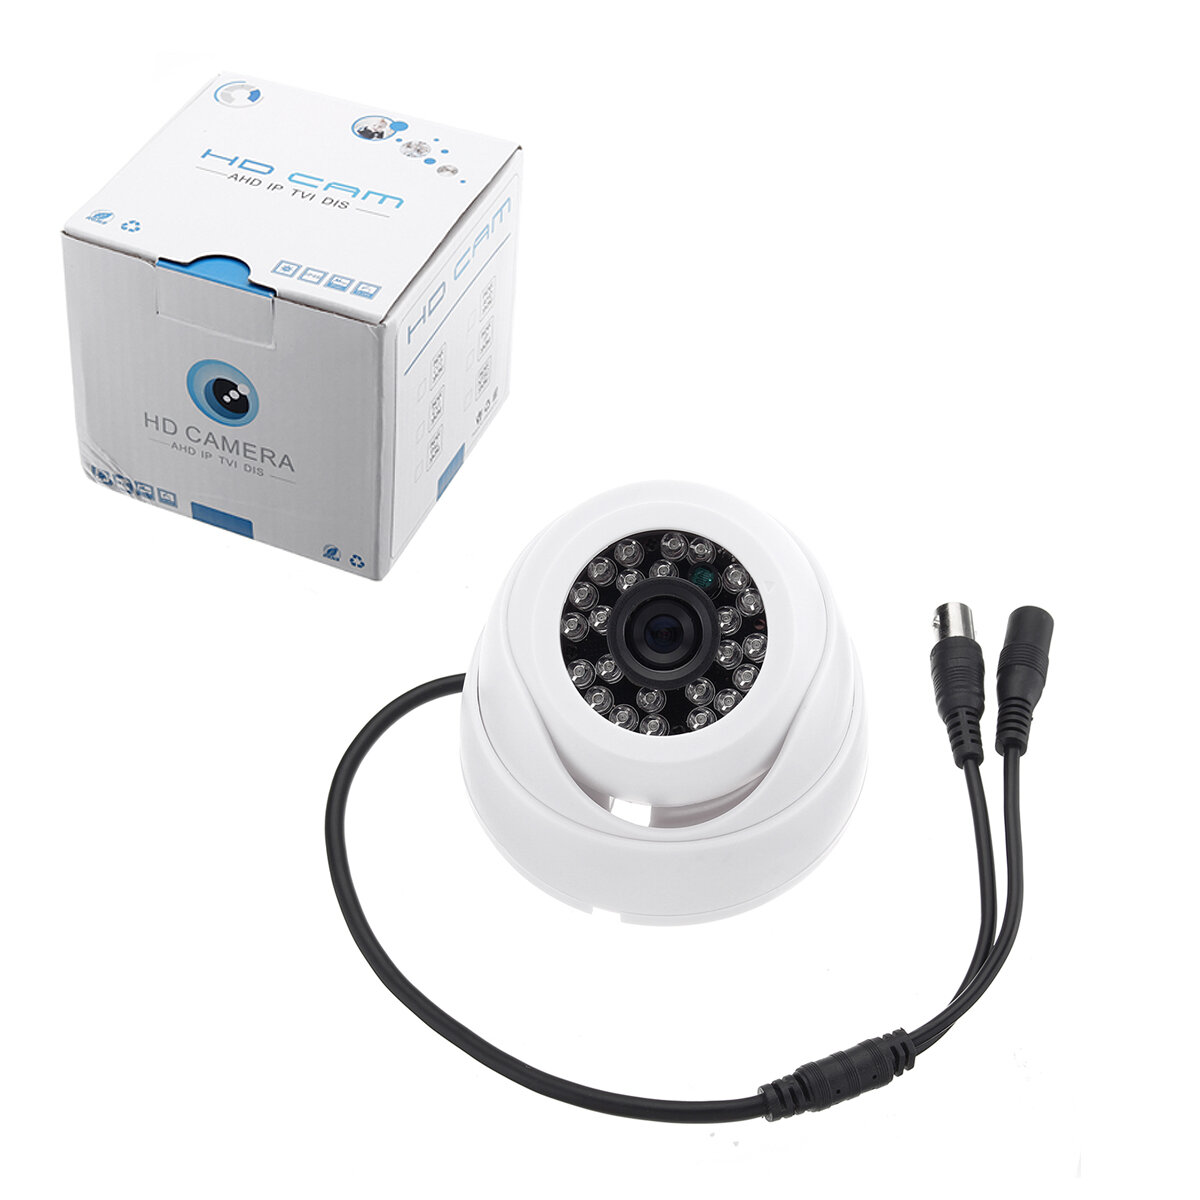 HD 1200TVL CCTV Surveillance Security Camera Outdoor IR Night Vision